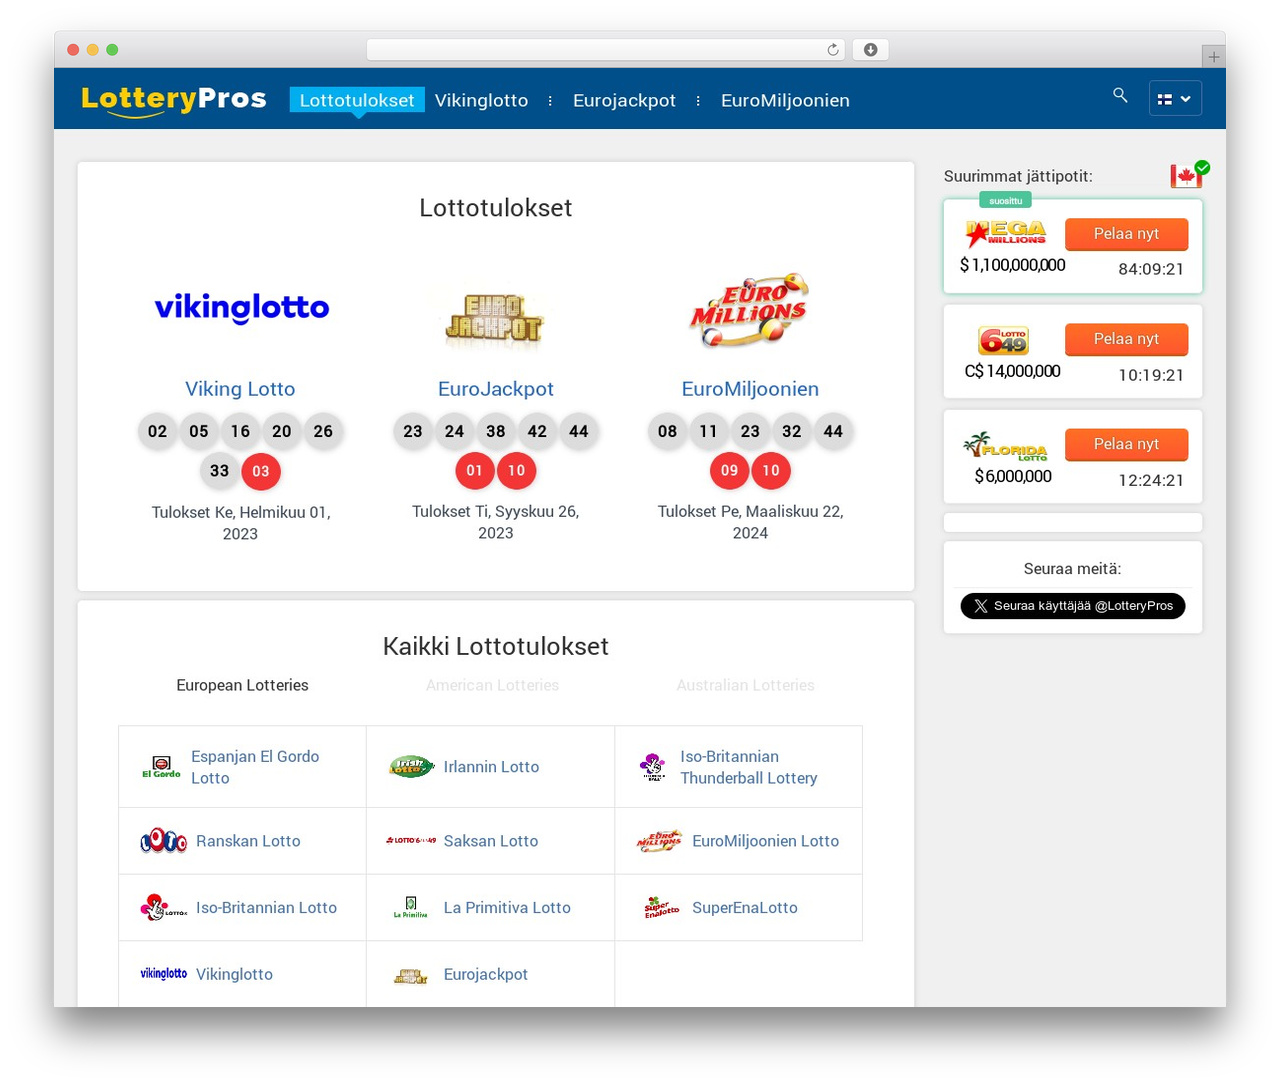 .9 WordPress theme by Lotterypros team 